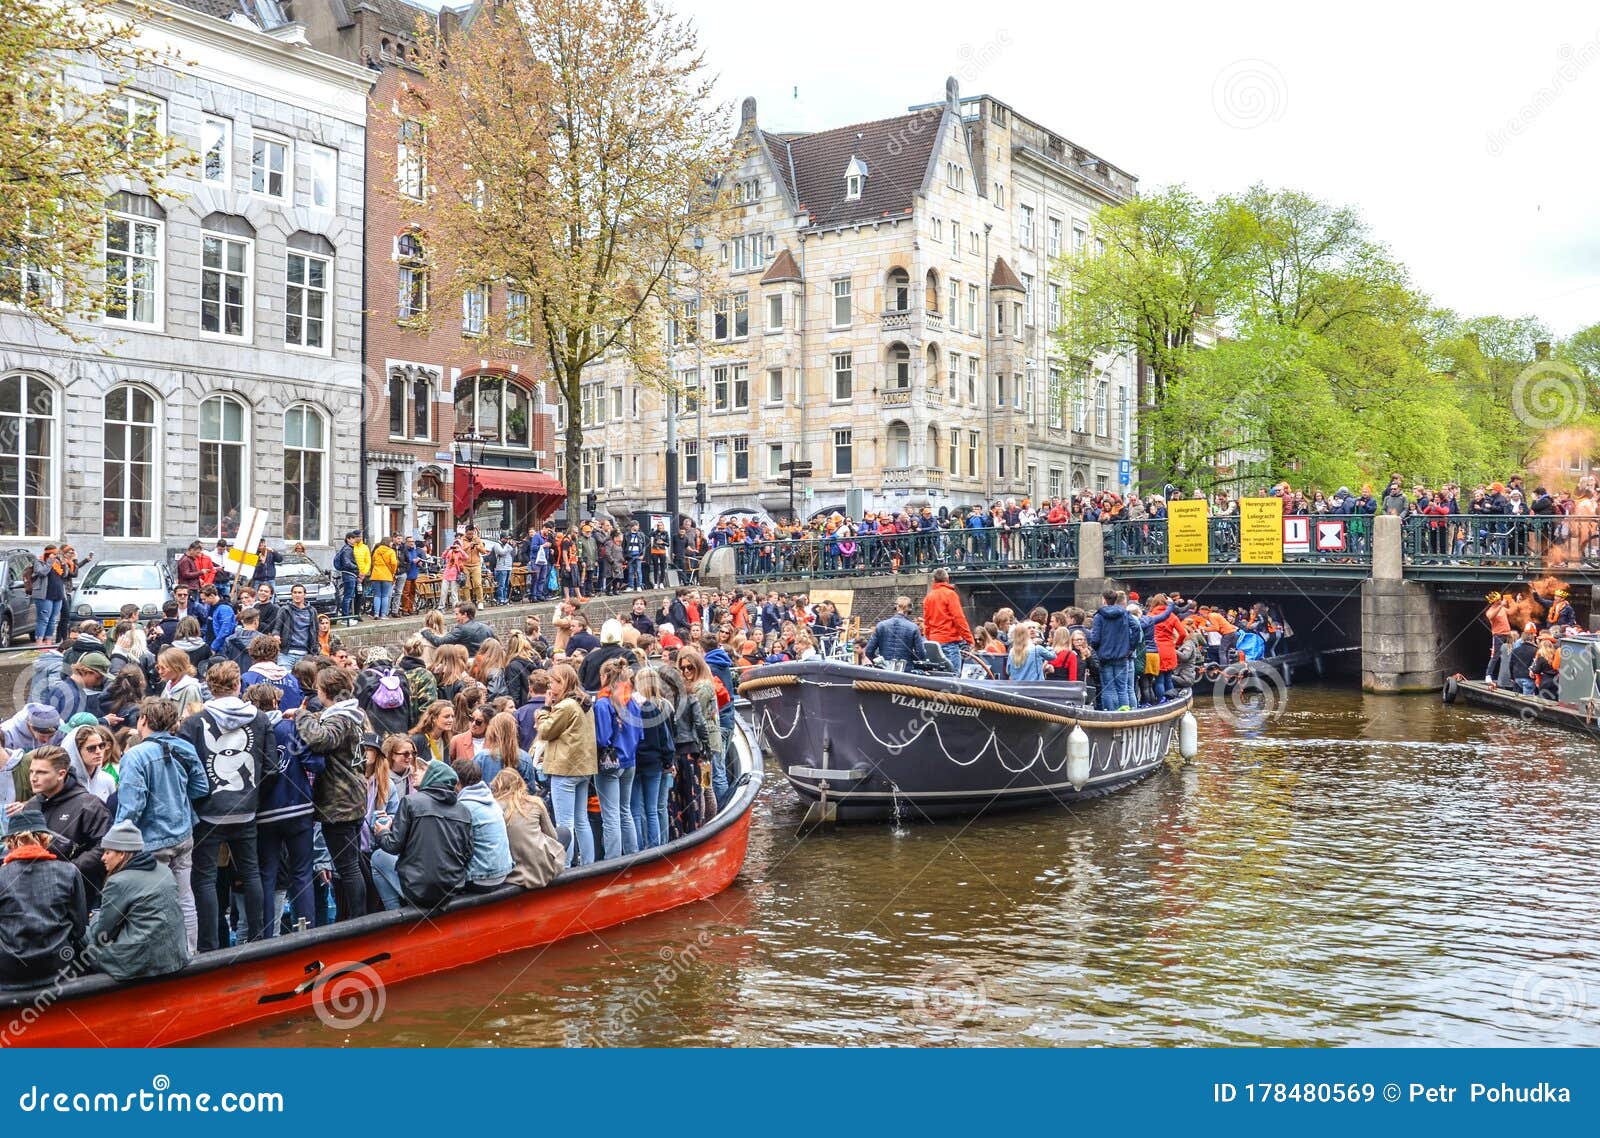 Celebrating King's Day In The Netherlands (Koningsdag)